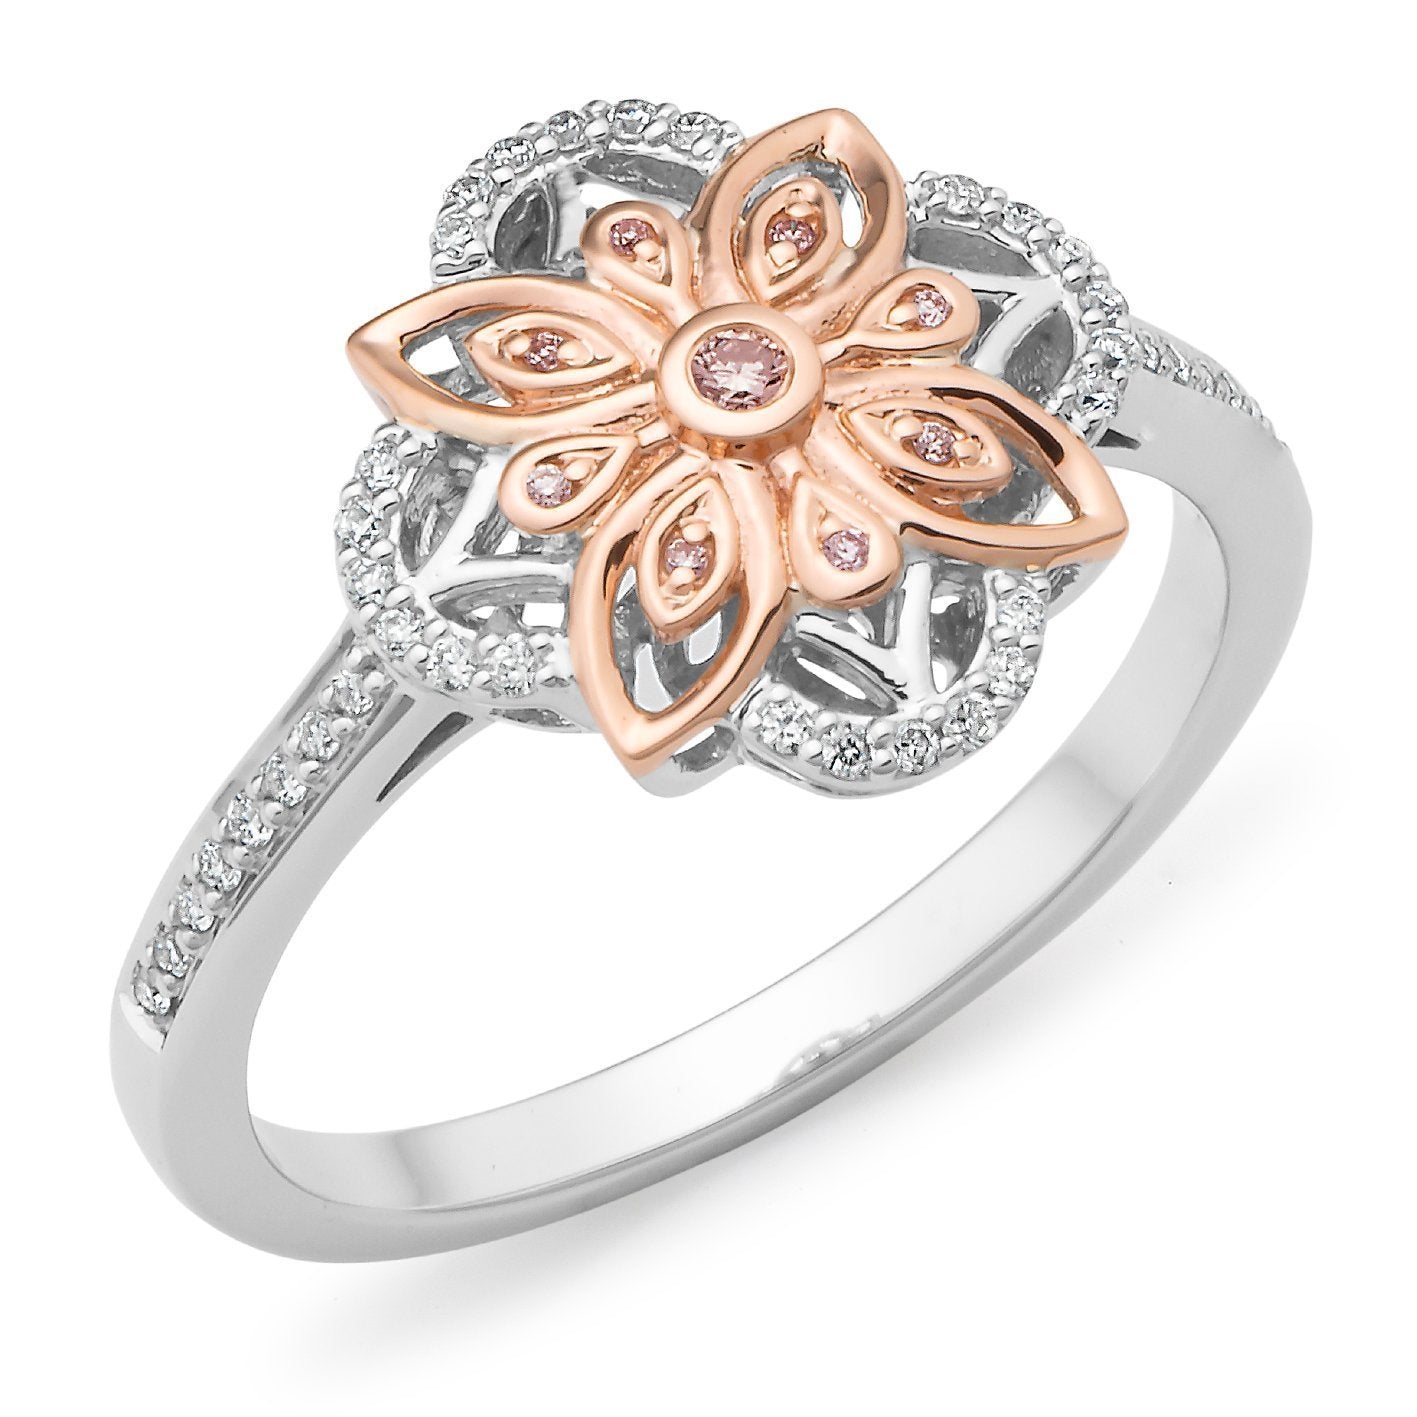 PINK CAVIAR 0.111ct Pink Diamond Ring in 9ct White & Rose Gold